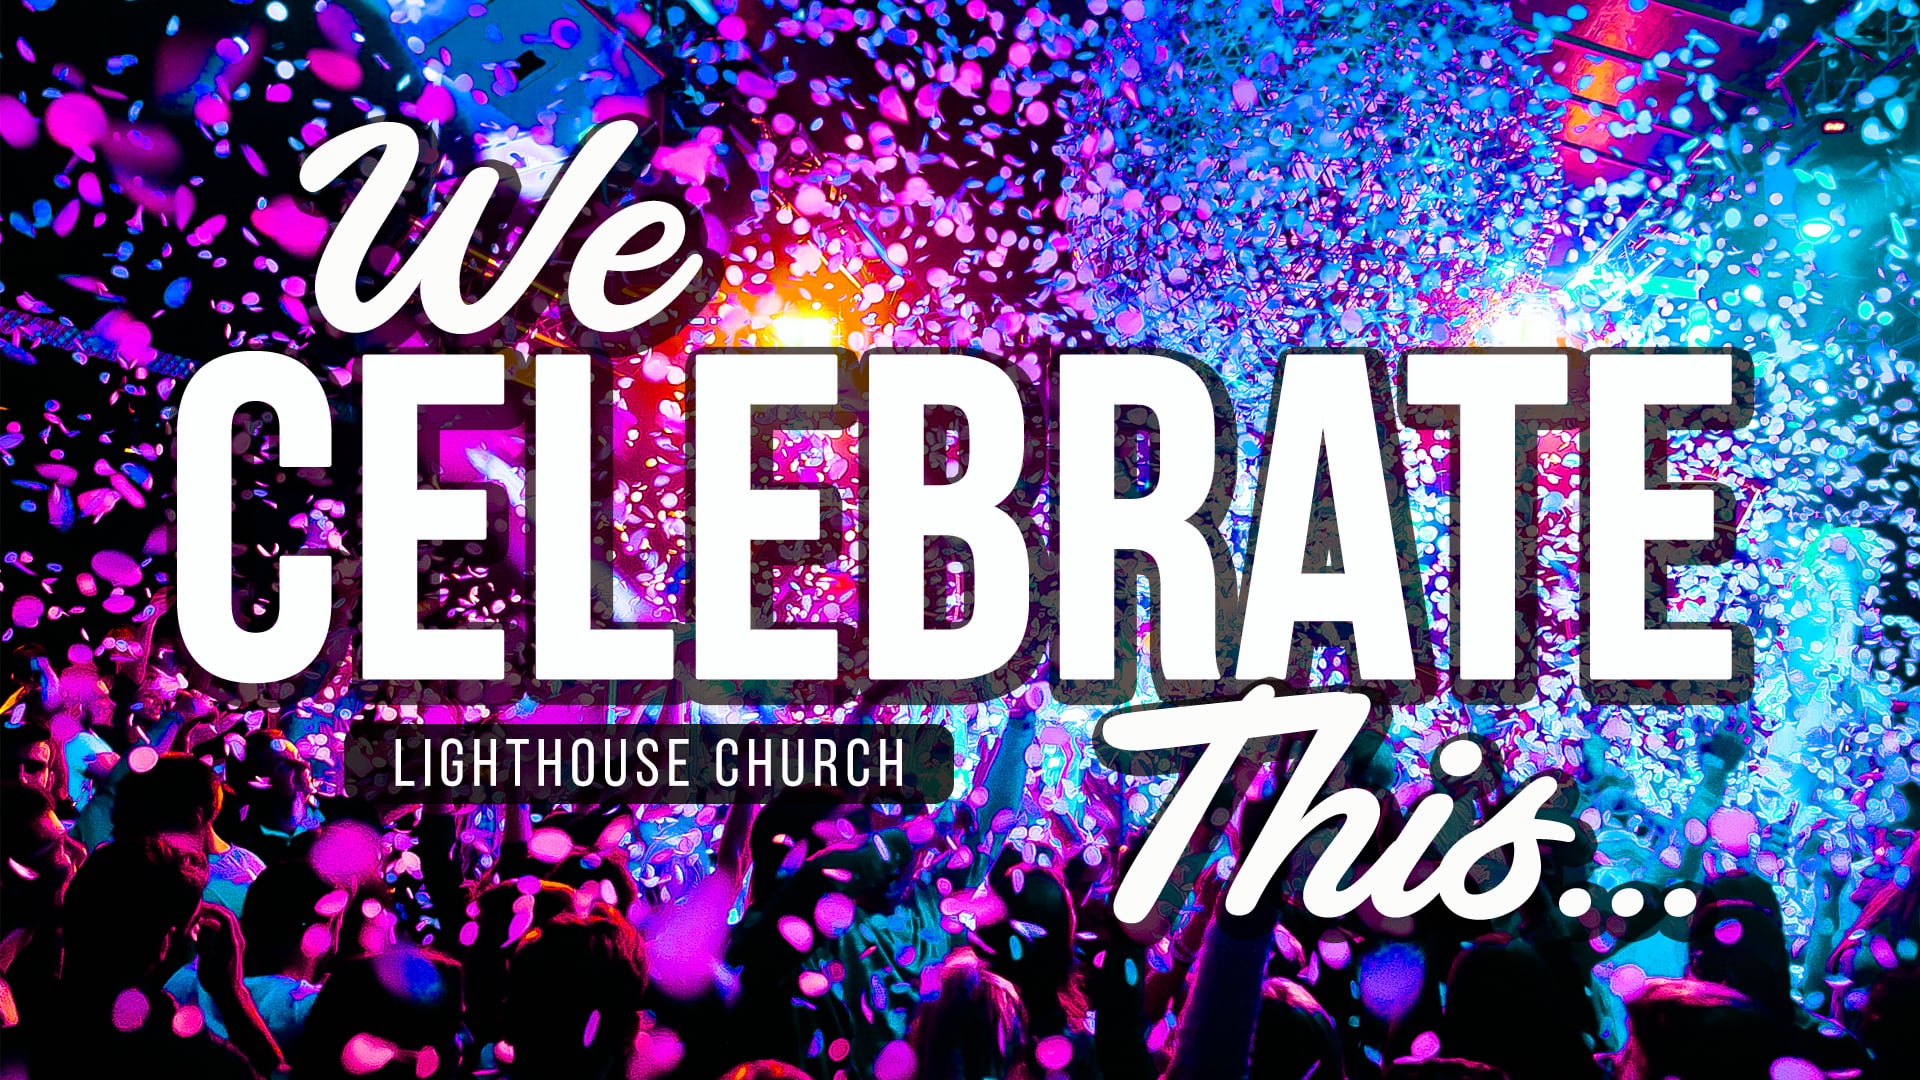 We Celebrate This - Part 2 - God's Presence